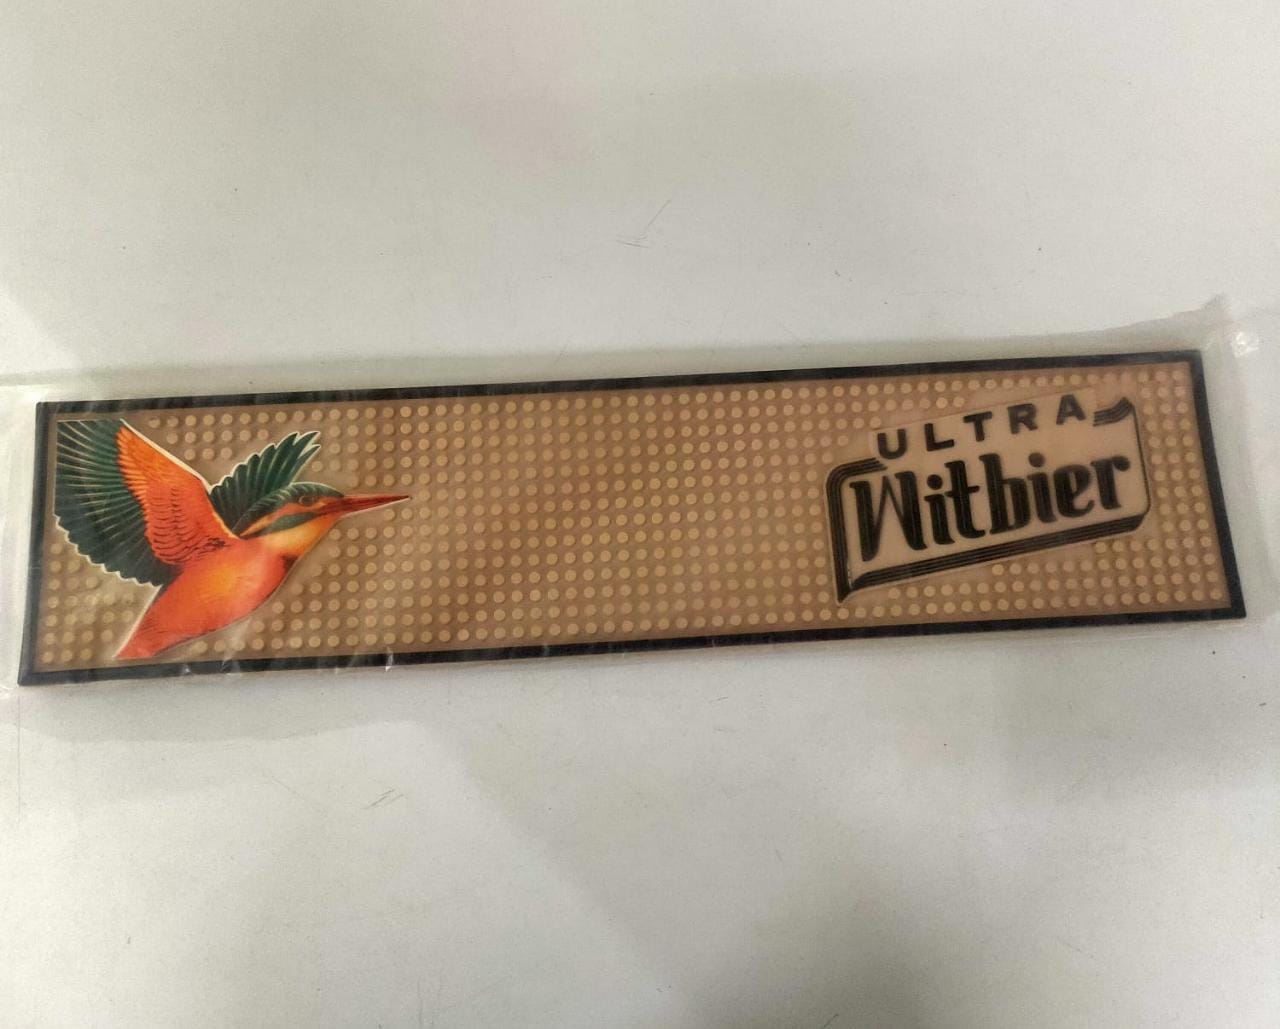 Kingfisher Ultra Witbier Bar Mat - 21X5"